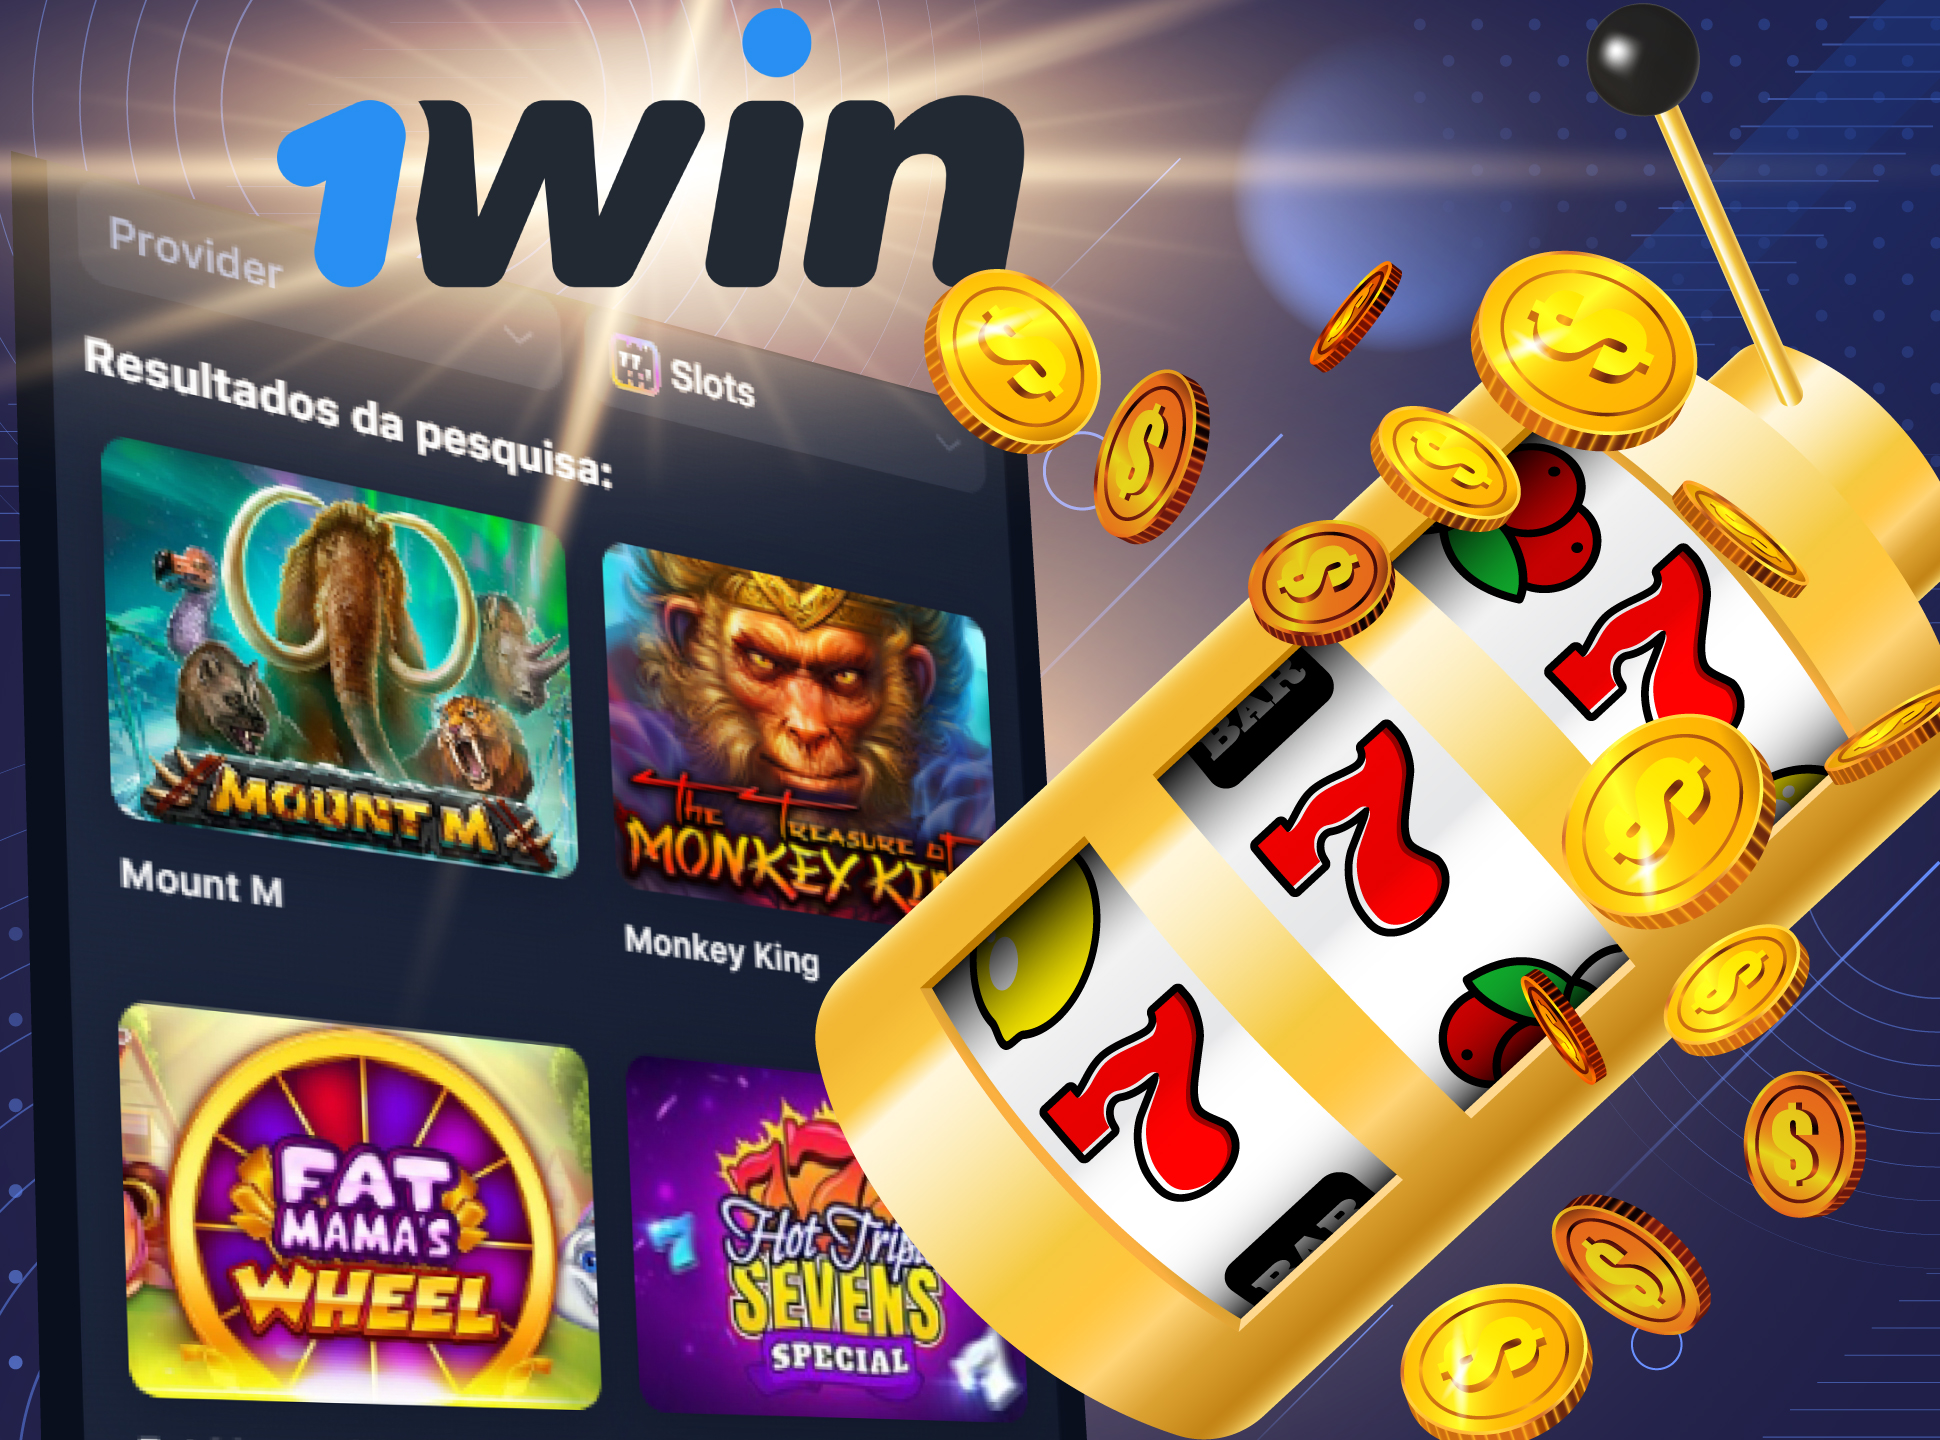 Jogue slots de fornecedores renomados no 1win Casino.